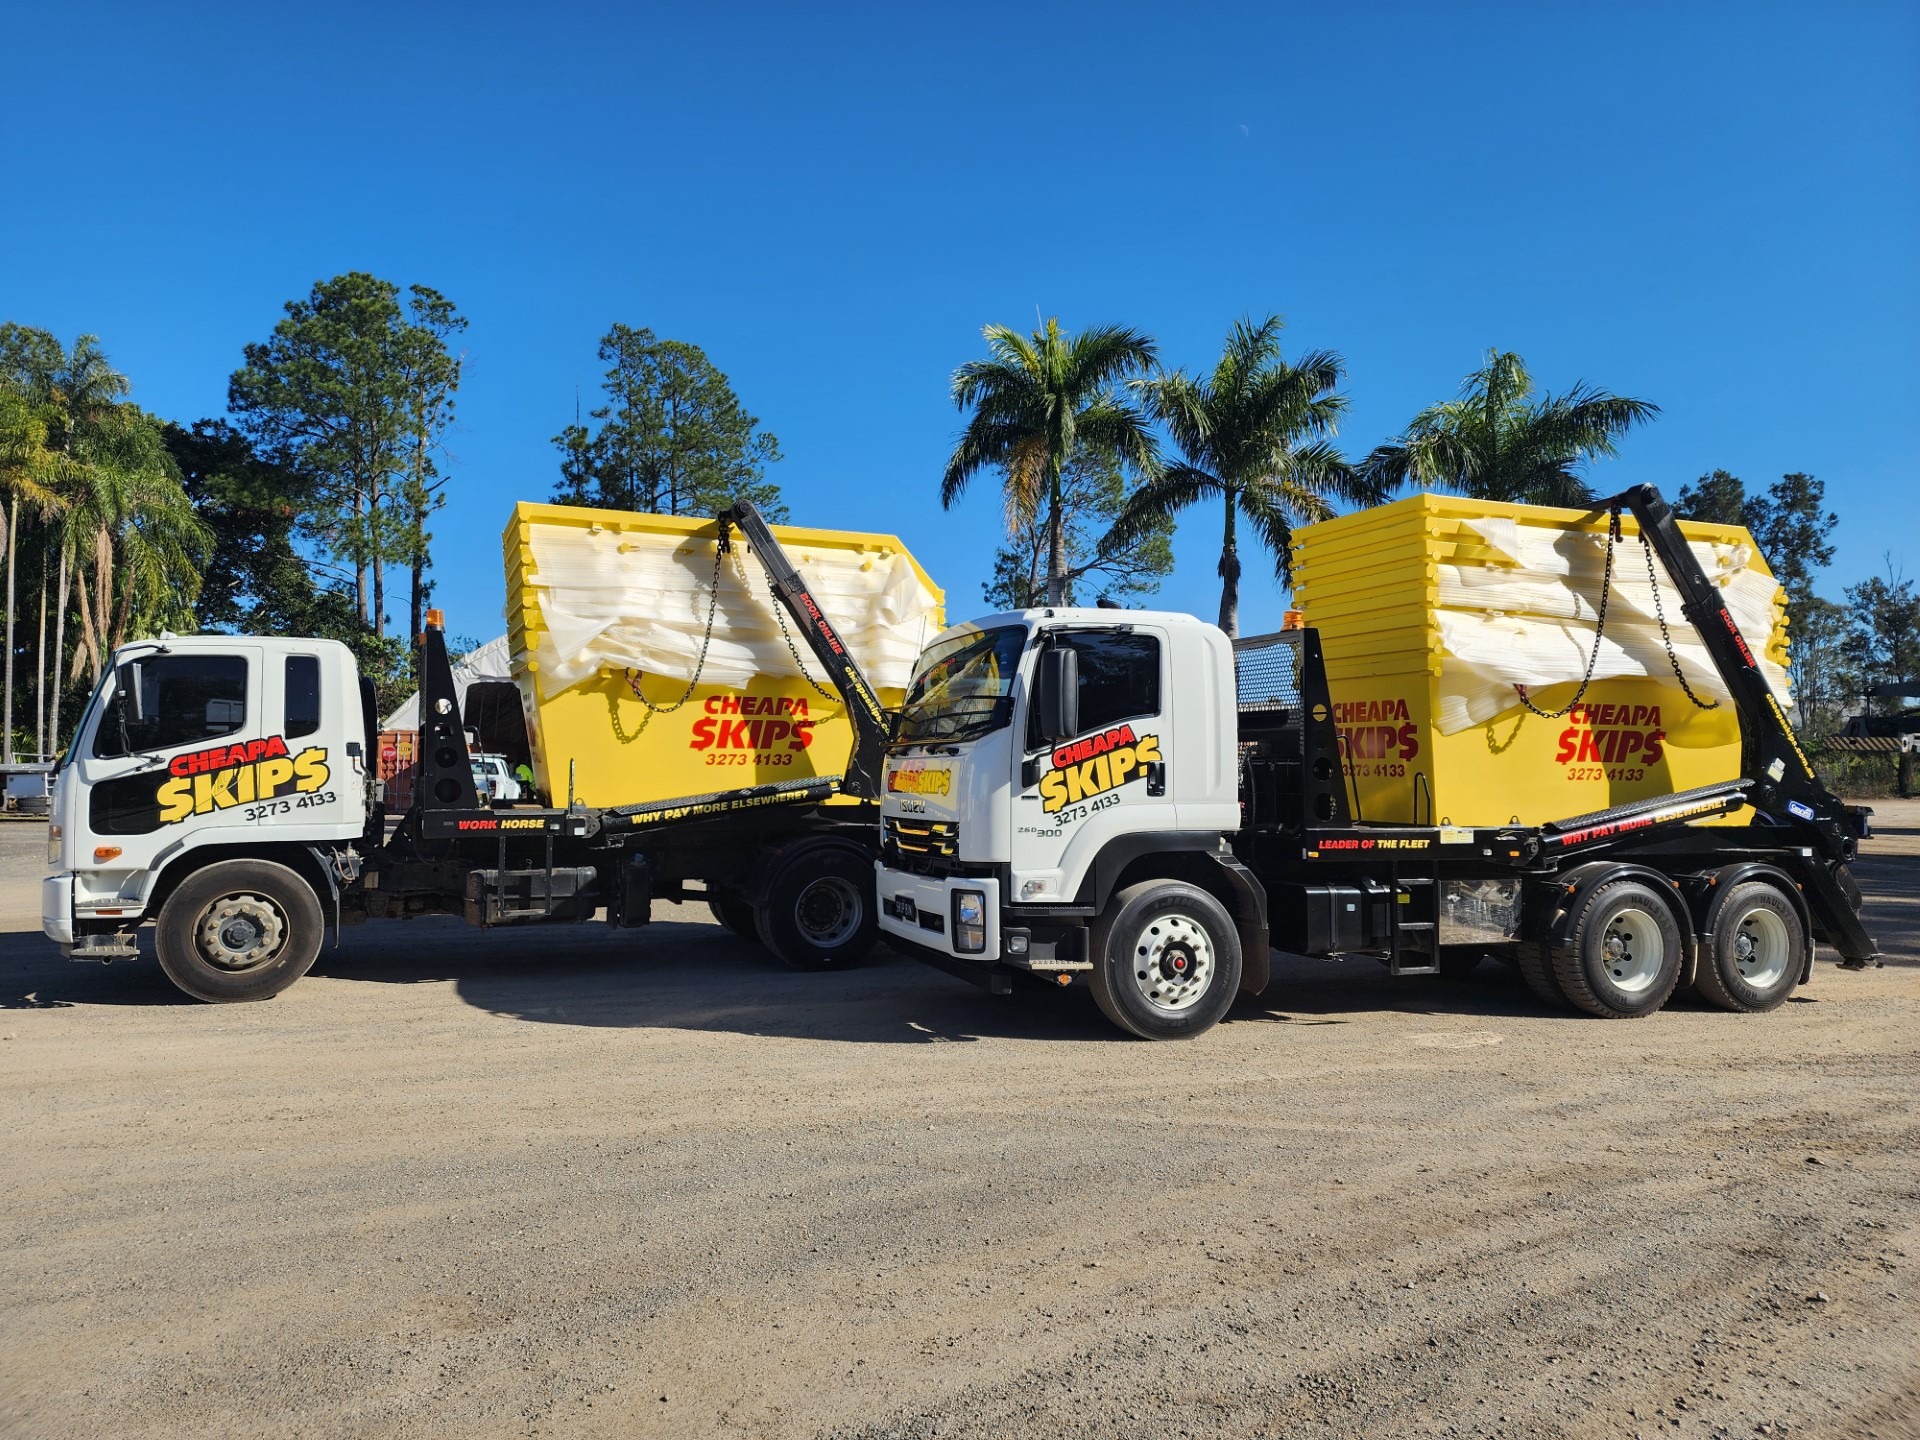 Skip vehicle trucks with stacked skip bins to promote the benefits of professional skip bin hire